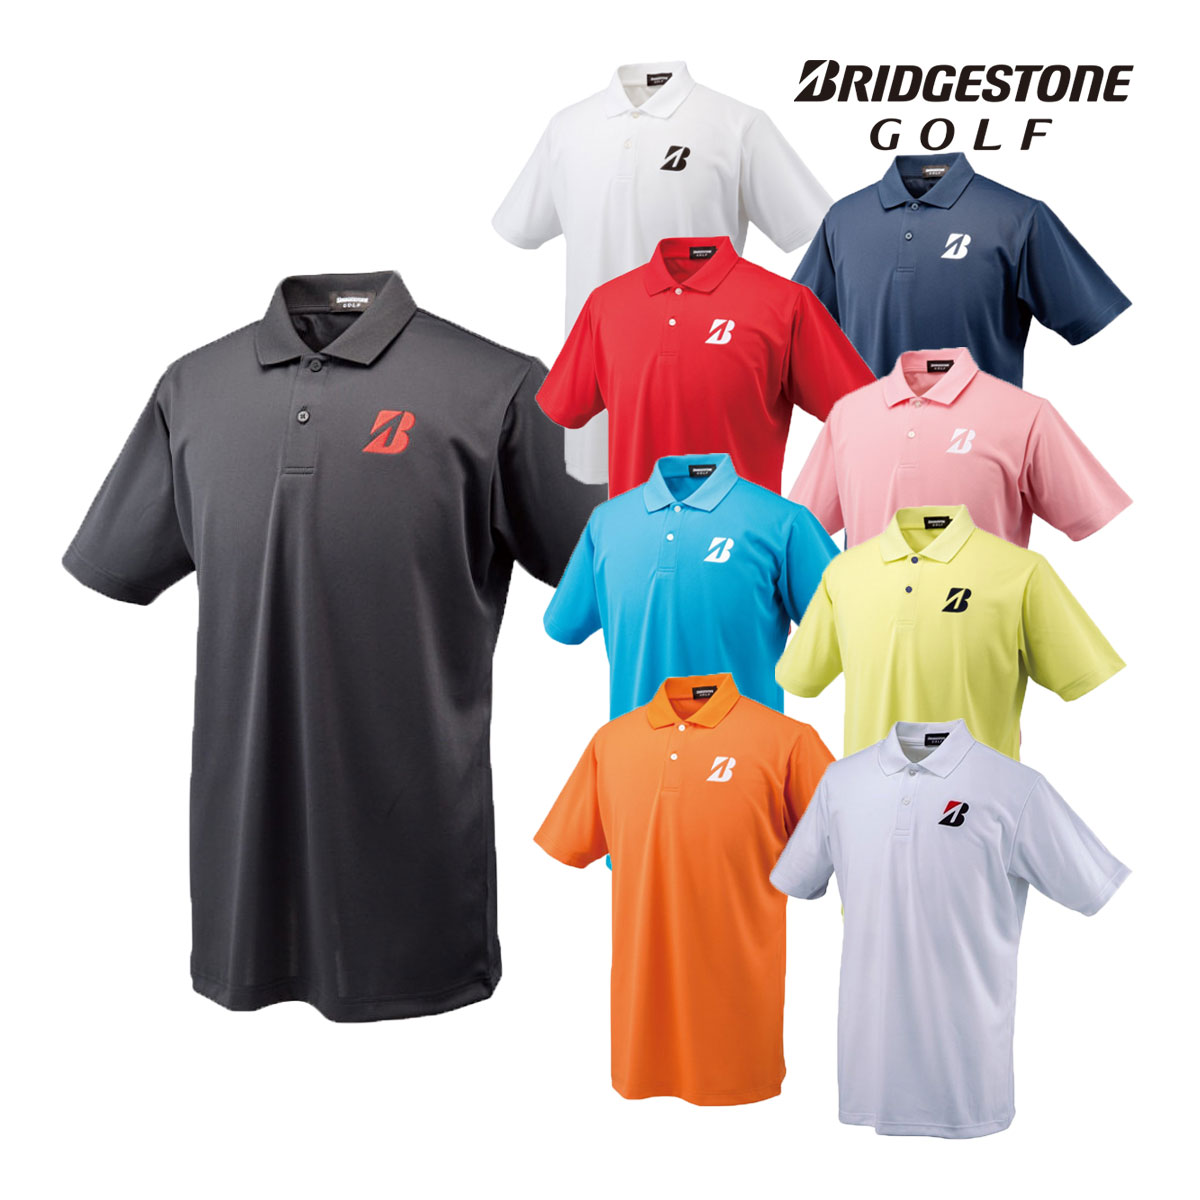 BridgestoneGolf ブリヂストンゴルフ ゴルフウエア 半袖ポロシャツ 「 50G01A 」 メンズ 